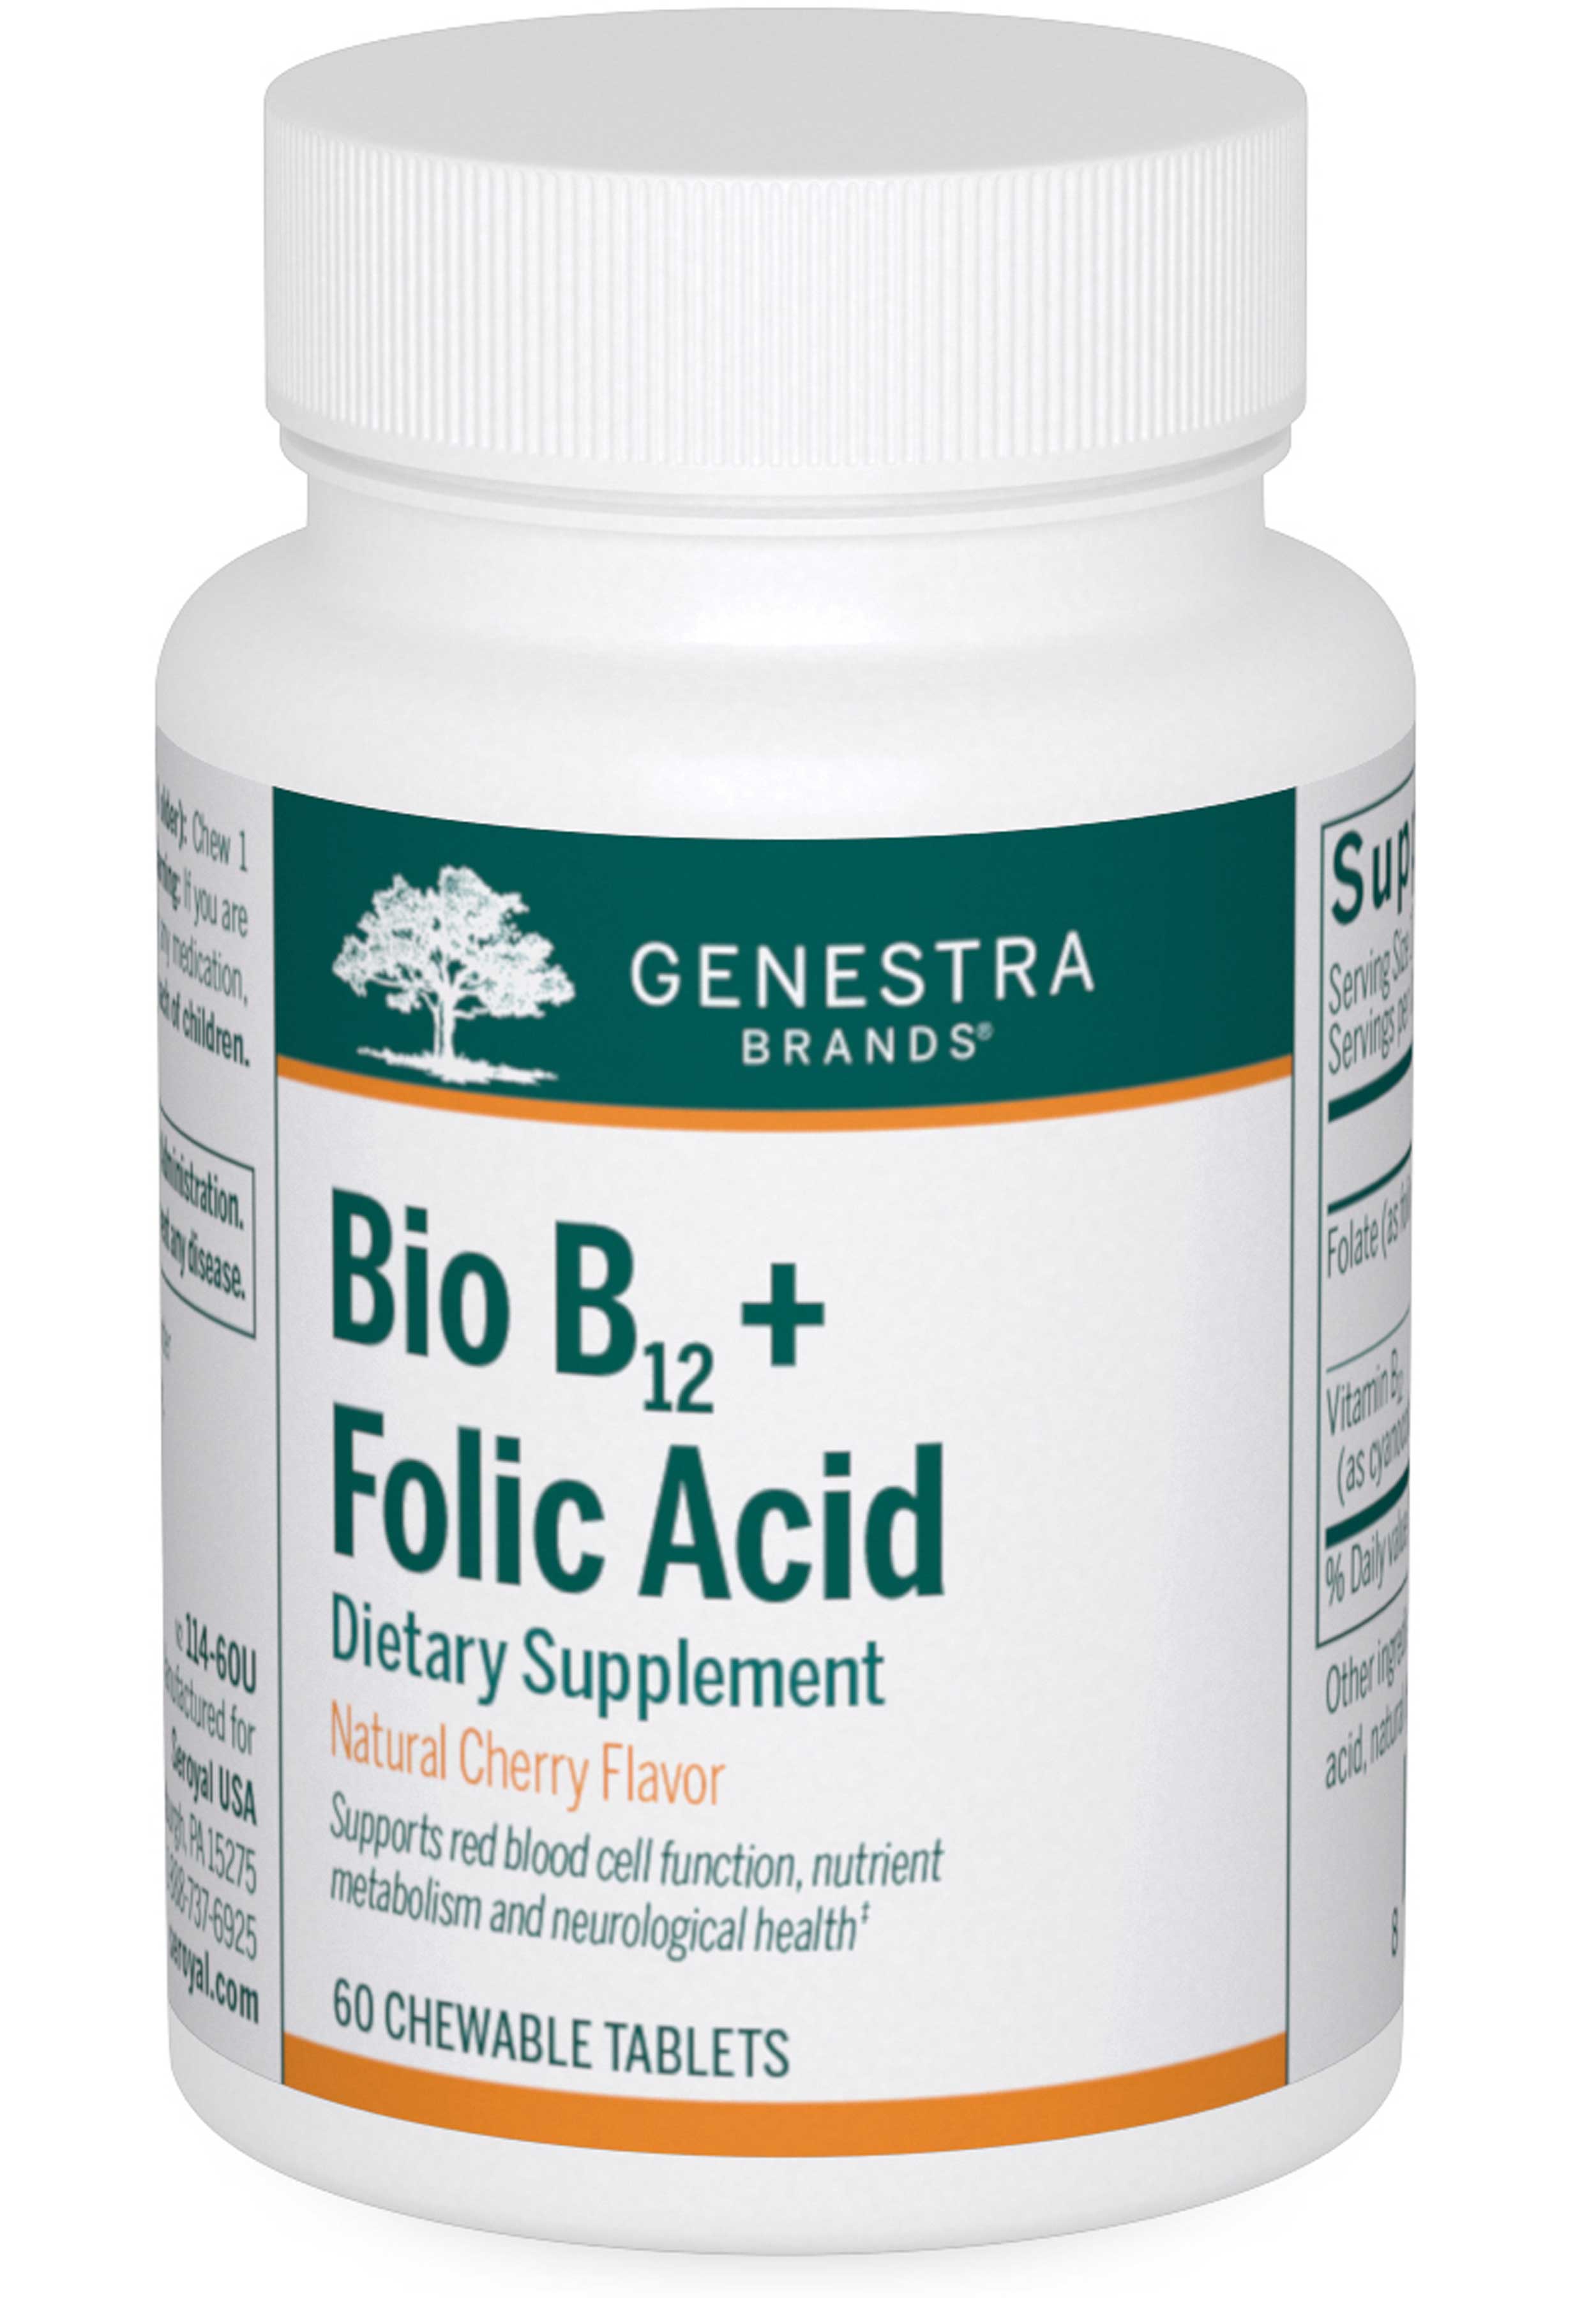 Genestra Brands Bio B12 + Folic Acid